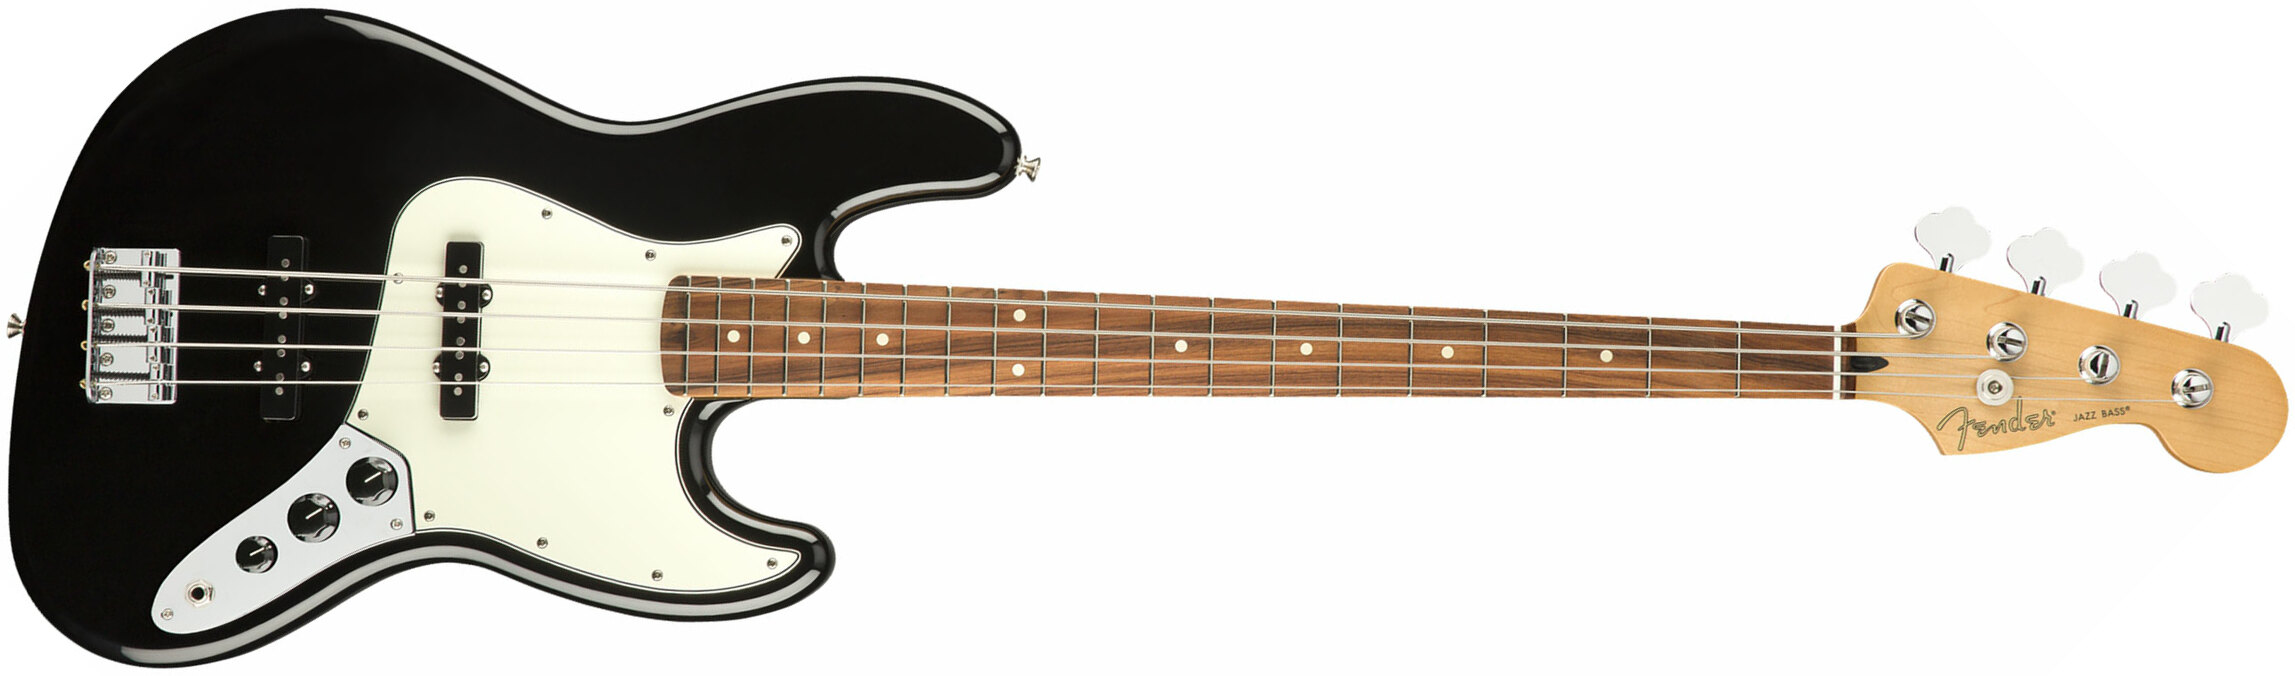 Fender Jazz Bass Player Mex Pf - Black - Basse Électrique Solid Body - Main picture